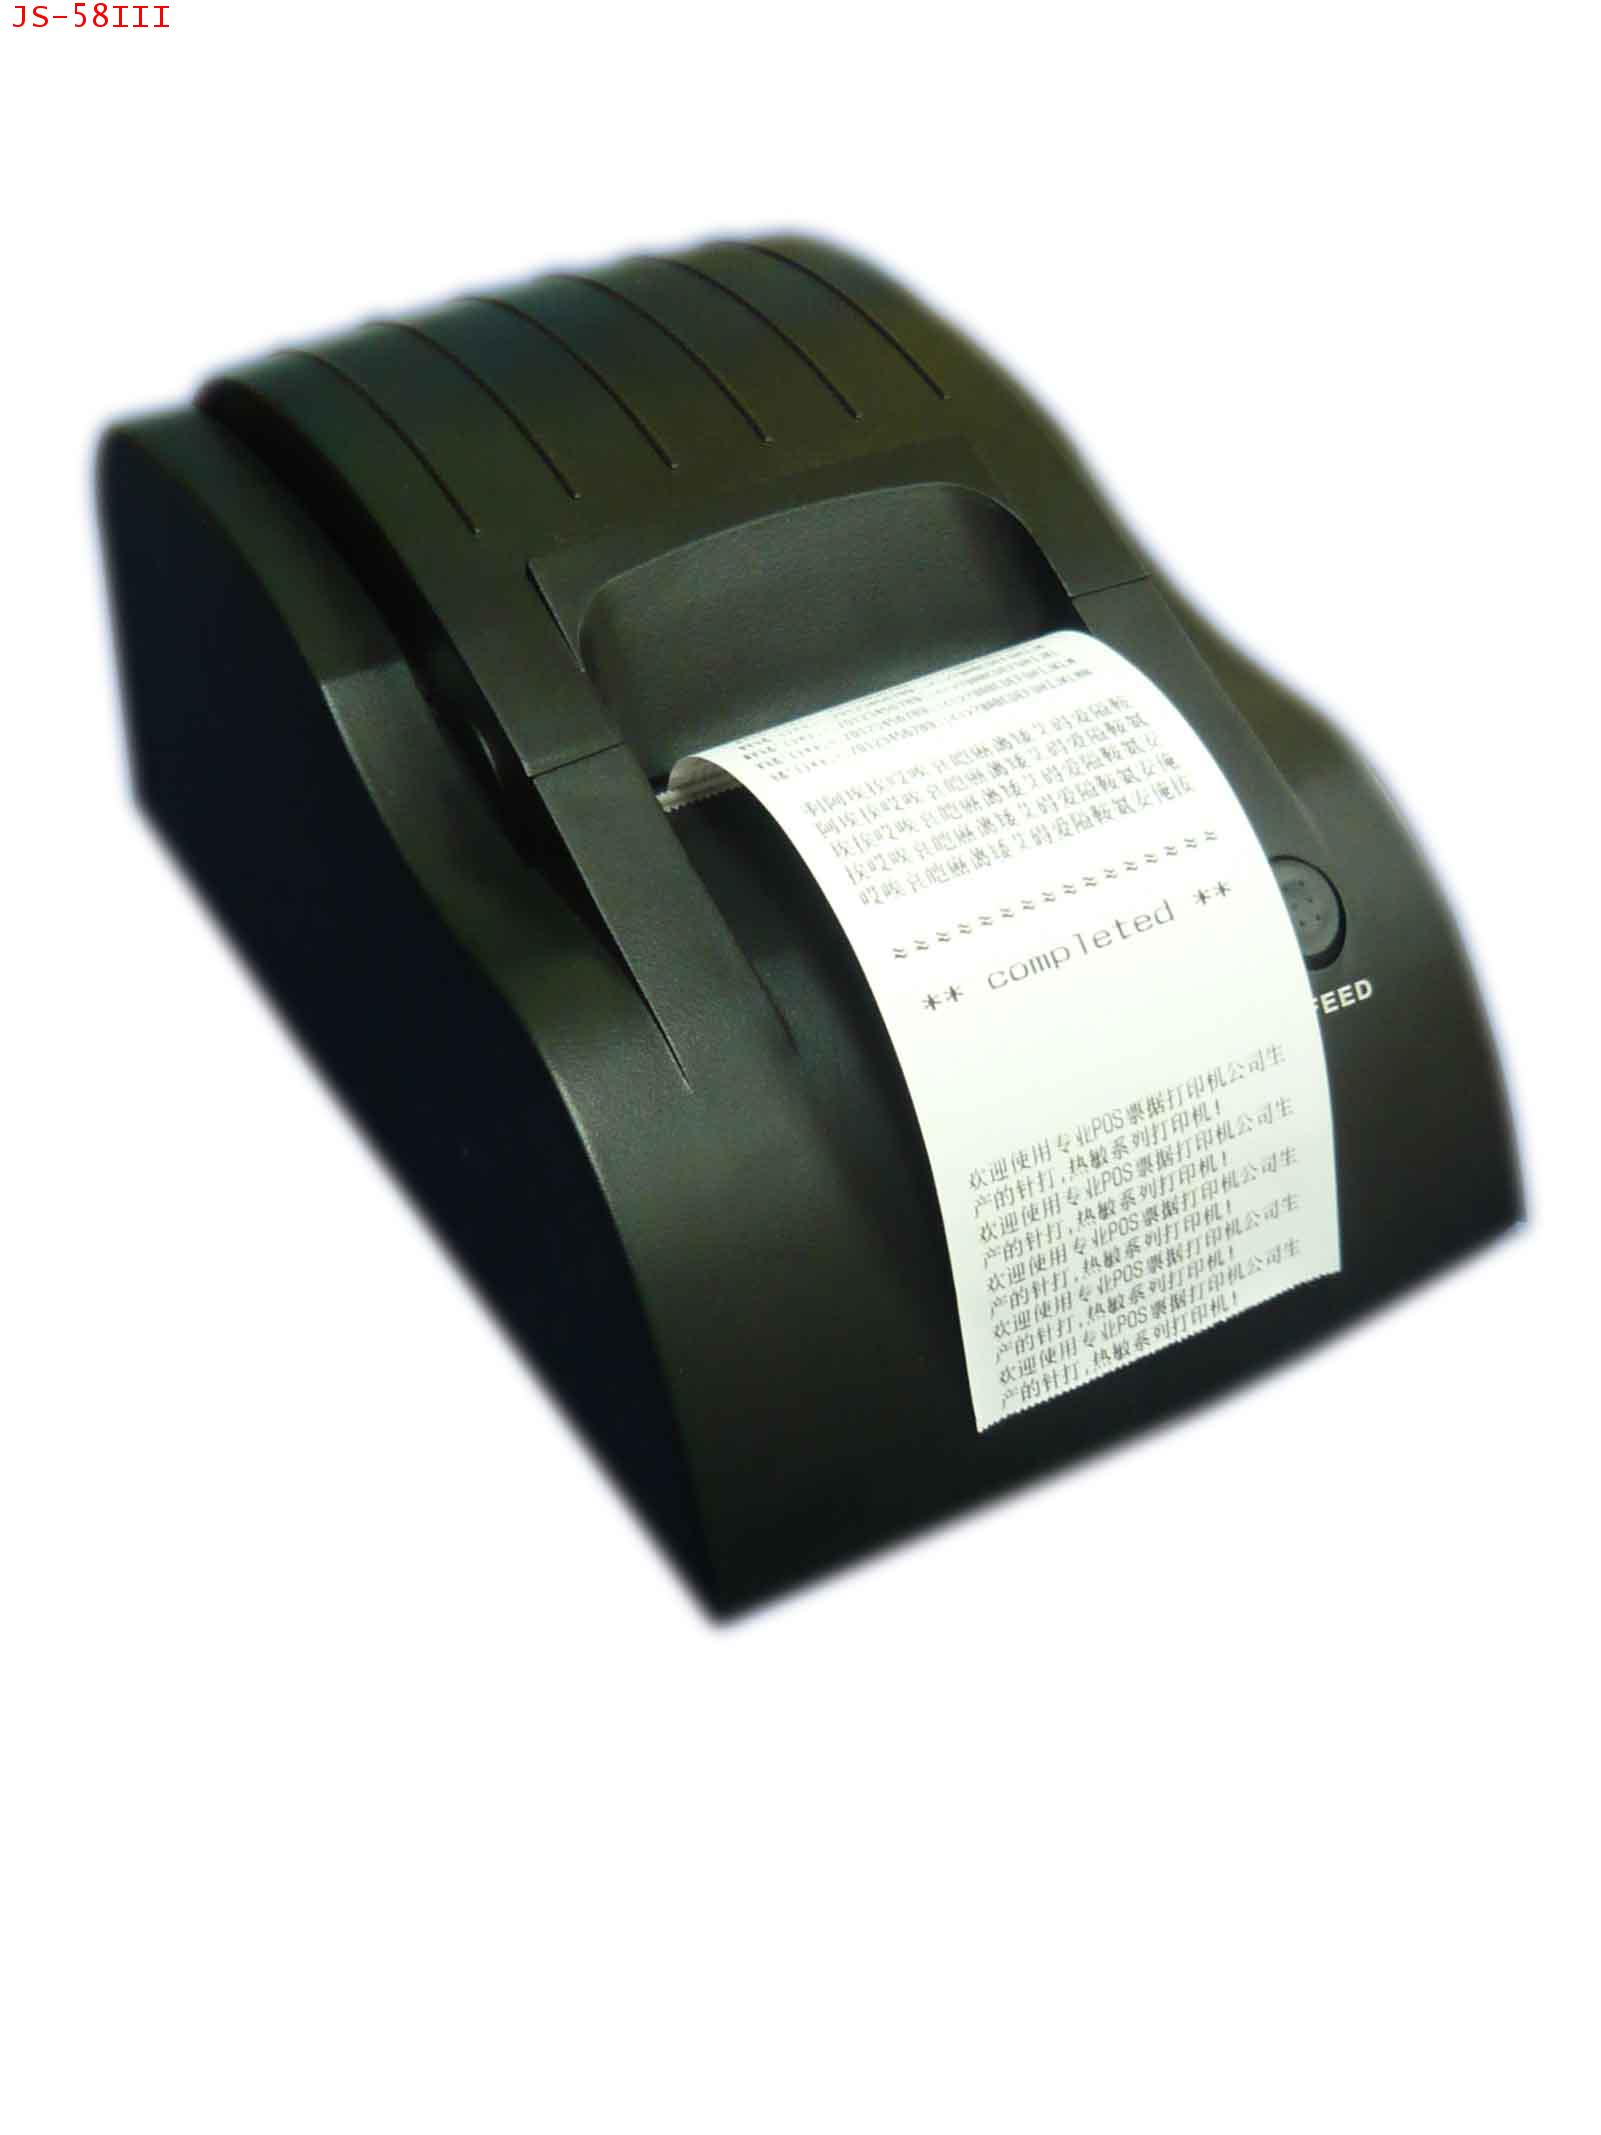 Thermal receipt printer JS-58III